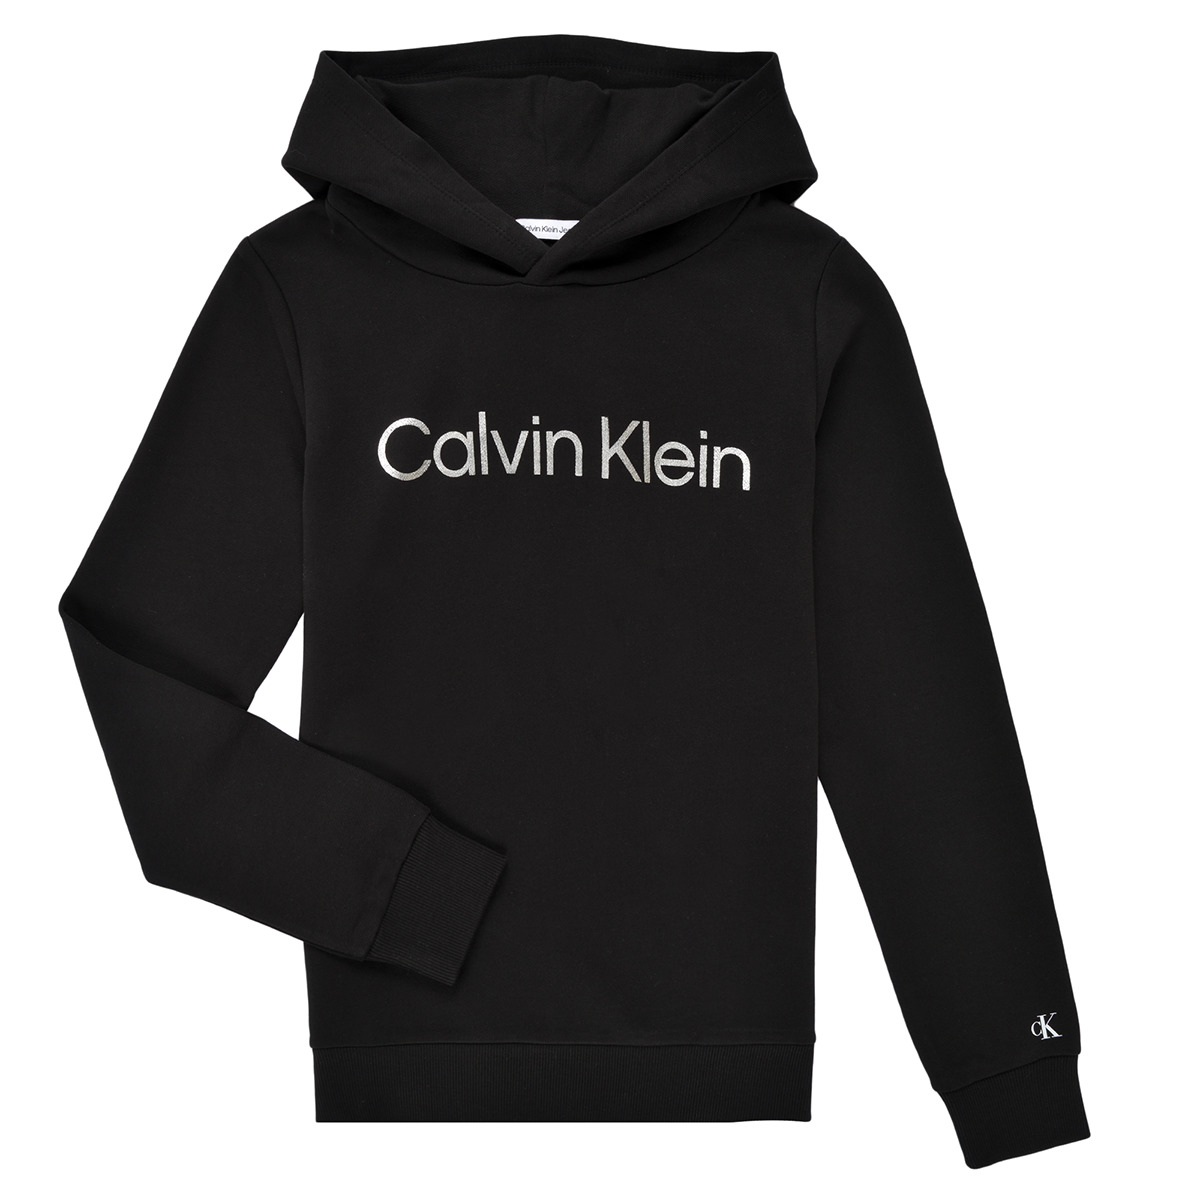 Calvin Klein Jeans Noir INSTITUTIONAL SILVER LOGO HOODIE X9sIU55b